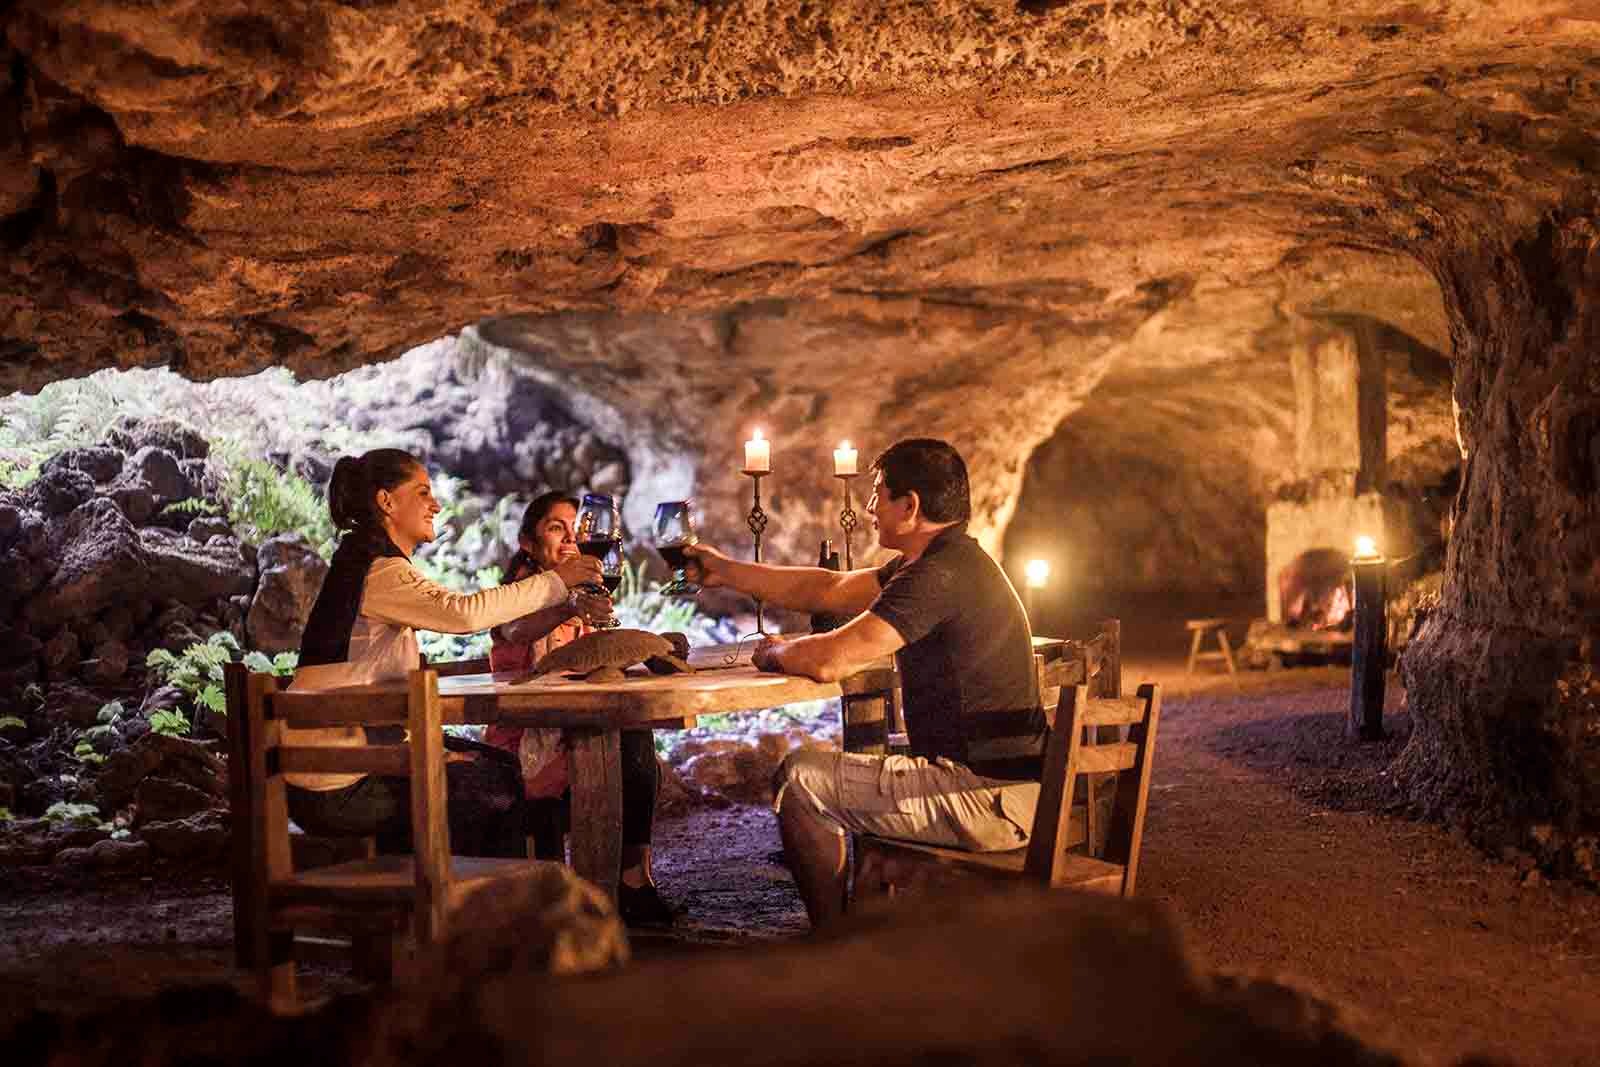 D'Cave restaurant